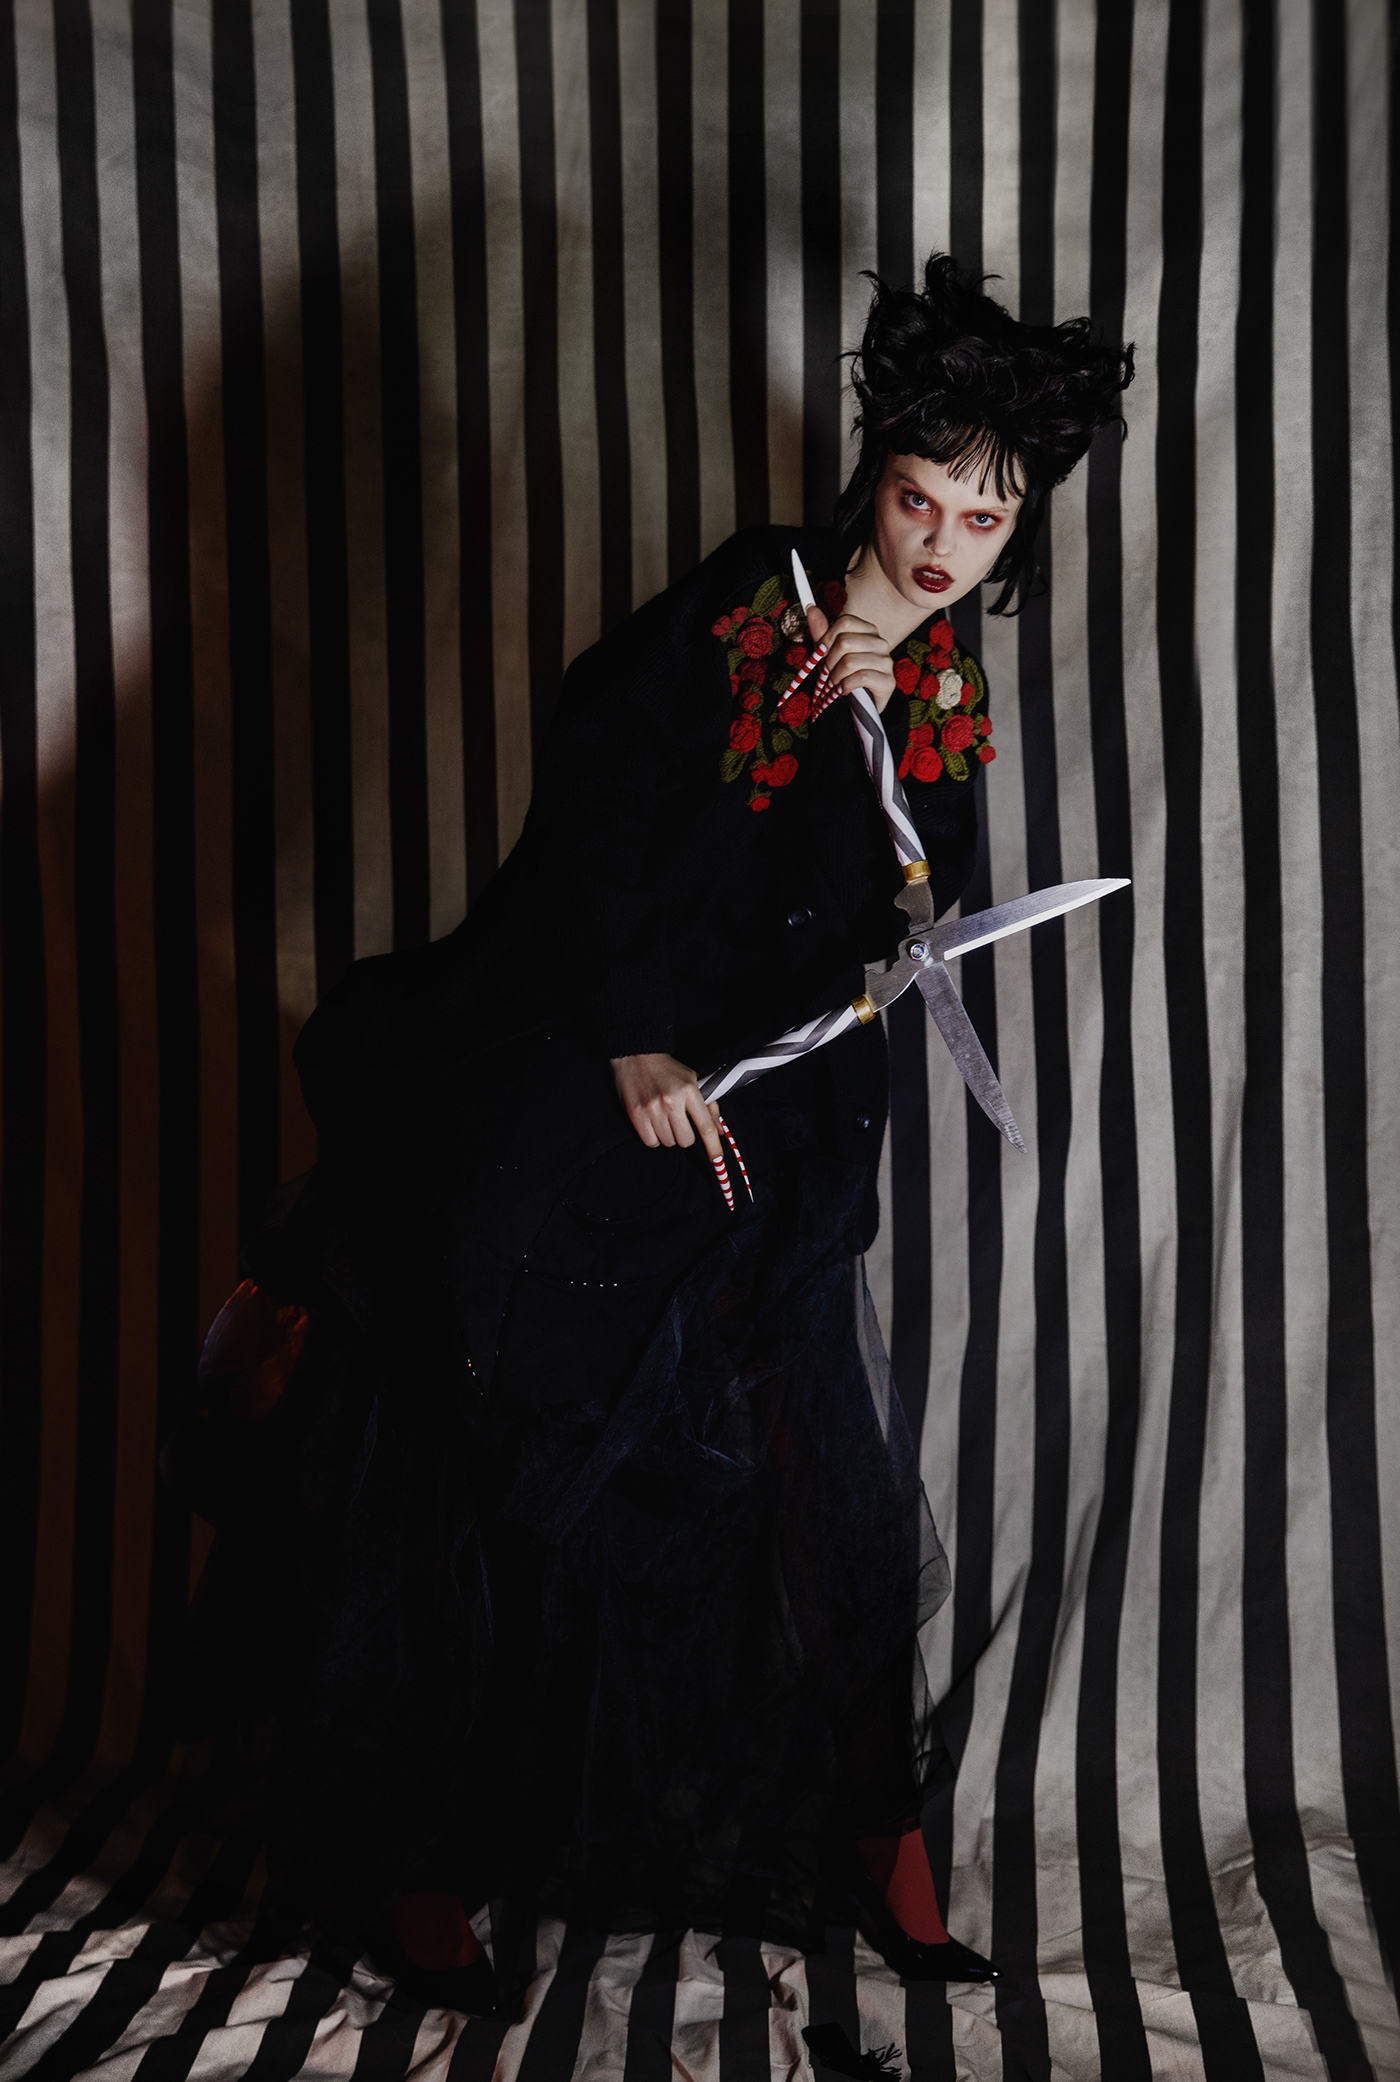 american horror story bw dark doll gothic movie portraits stripes Tim Burton